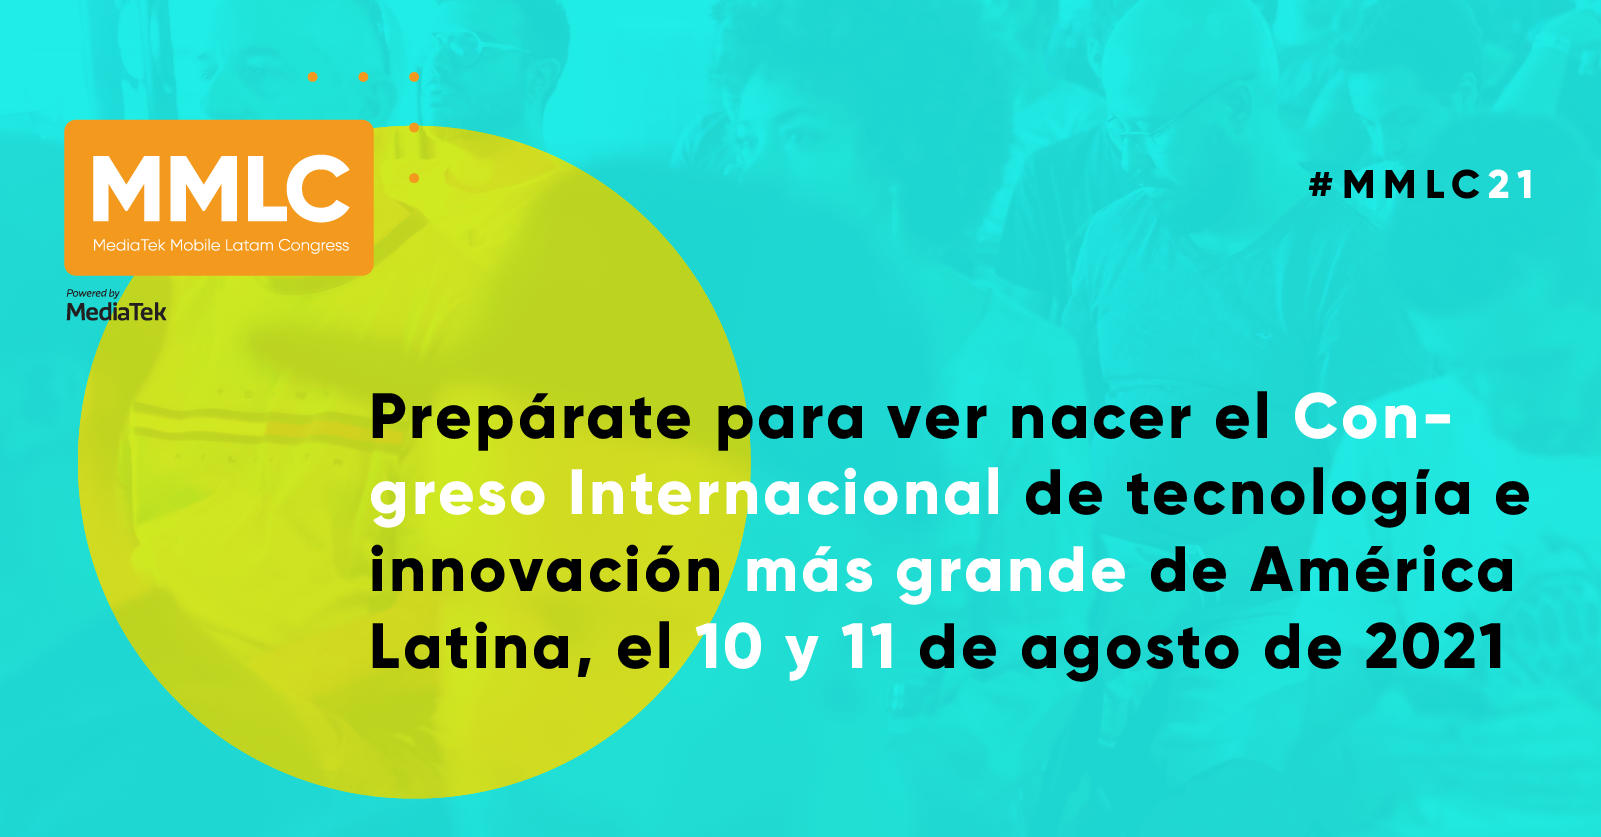 Agosto de 2021 verá nacer el Congreso de tecnología e innovación más grande de América Latina